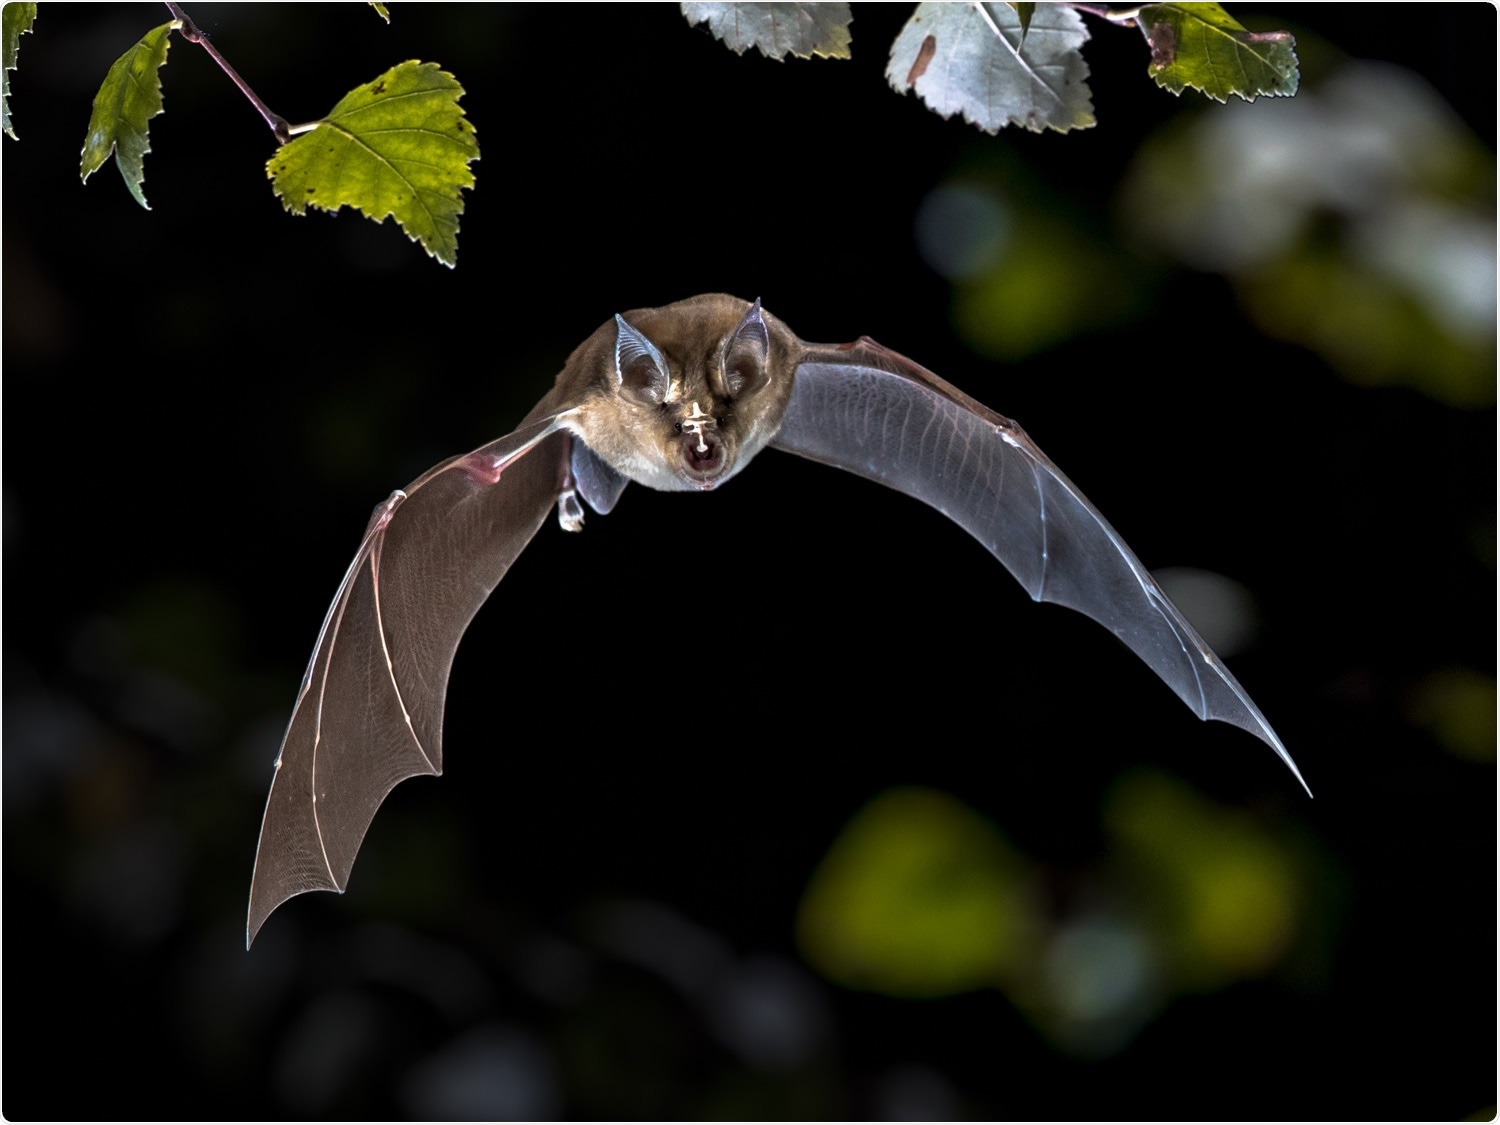 Study: A novel SARS-CoV-2 related coronavirus in bats from Cambodia. Image Credit: Rudmer Zwerver